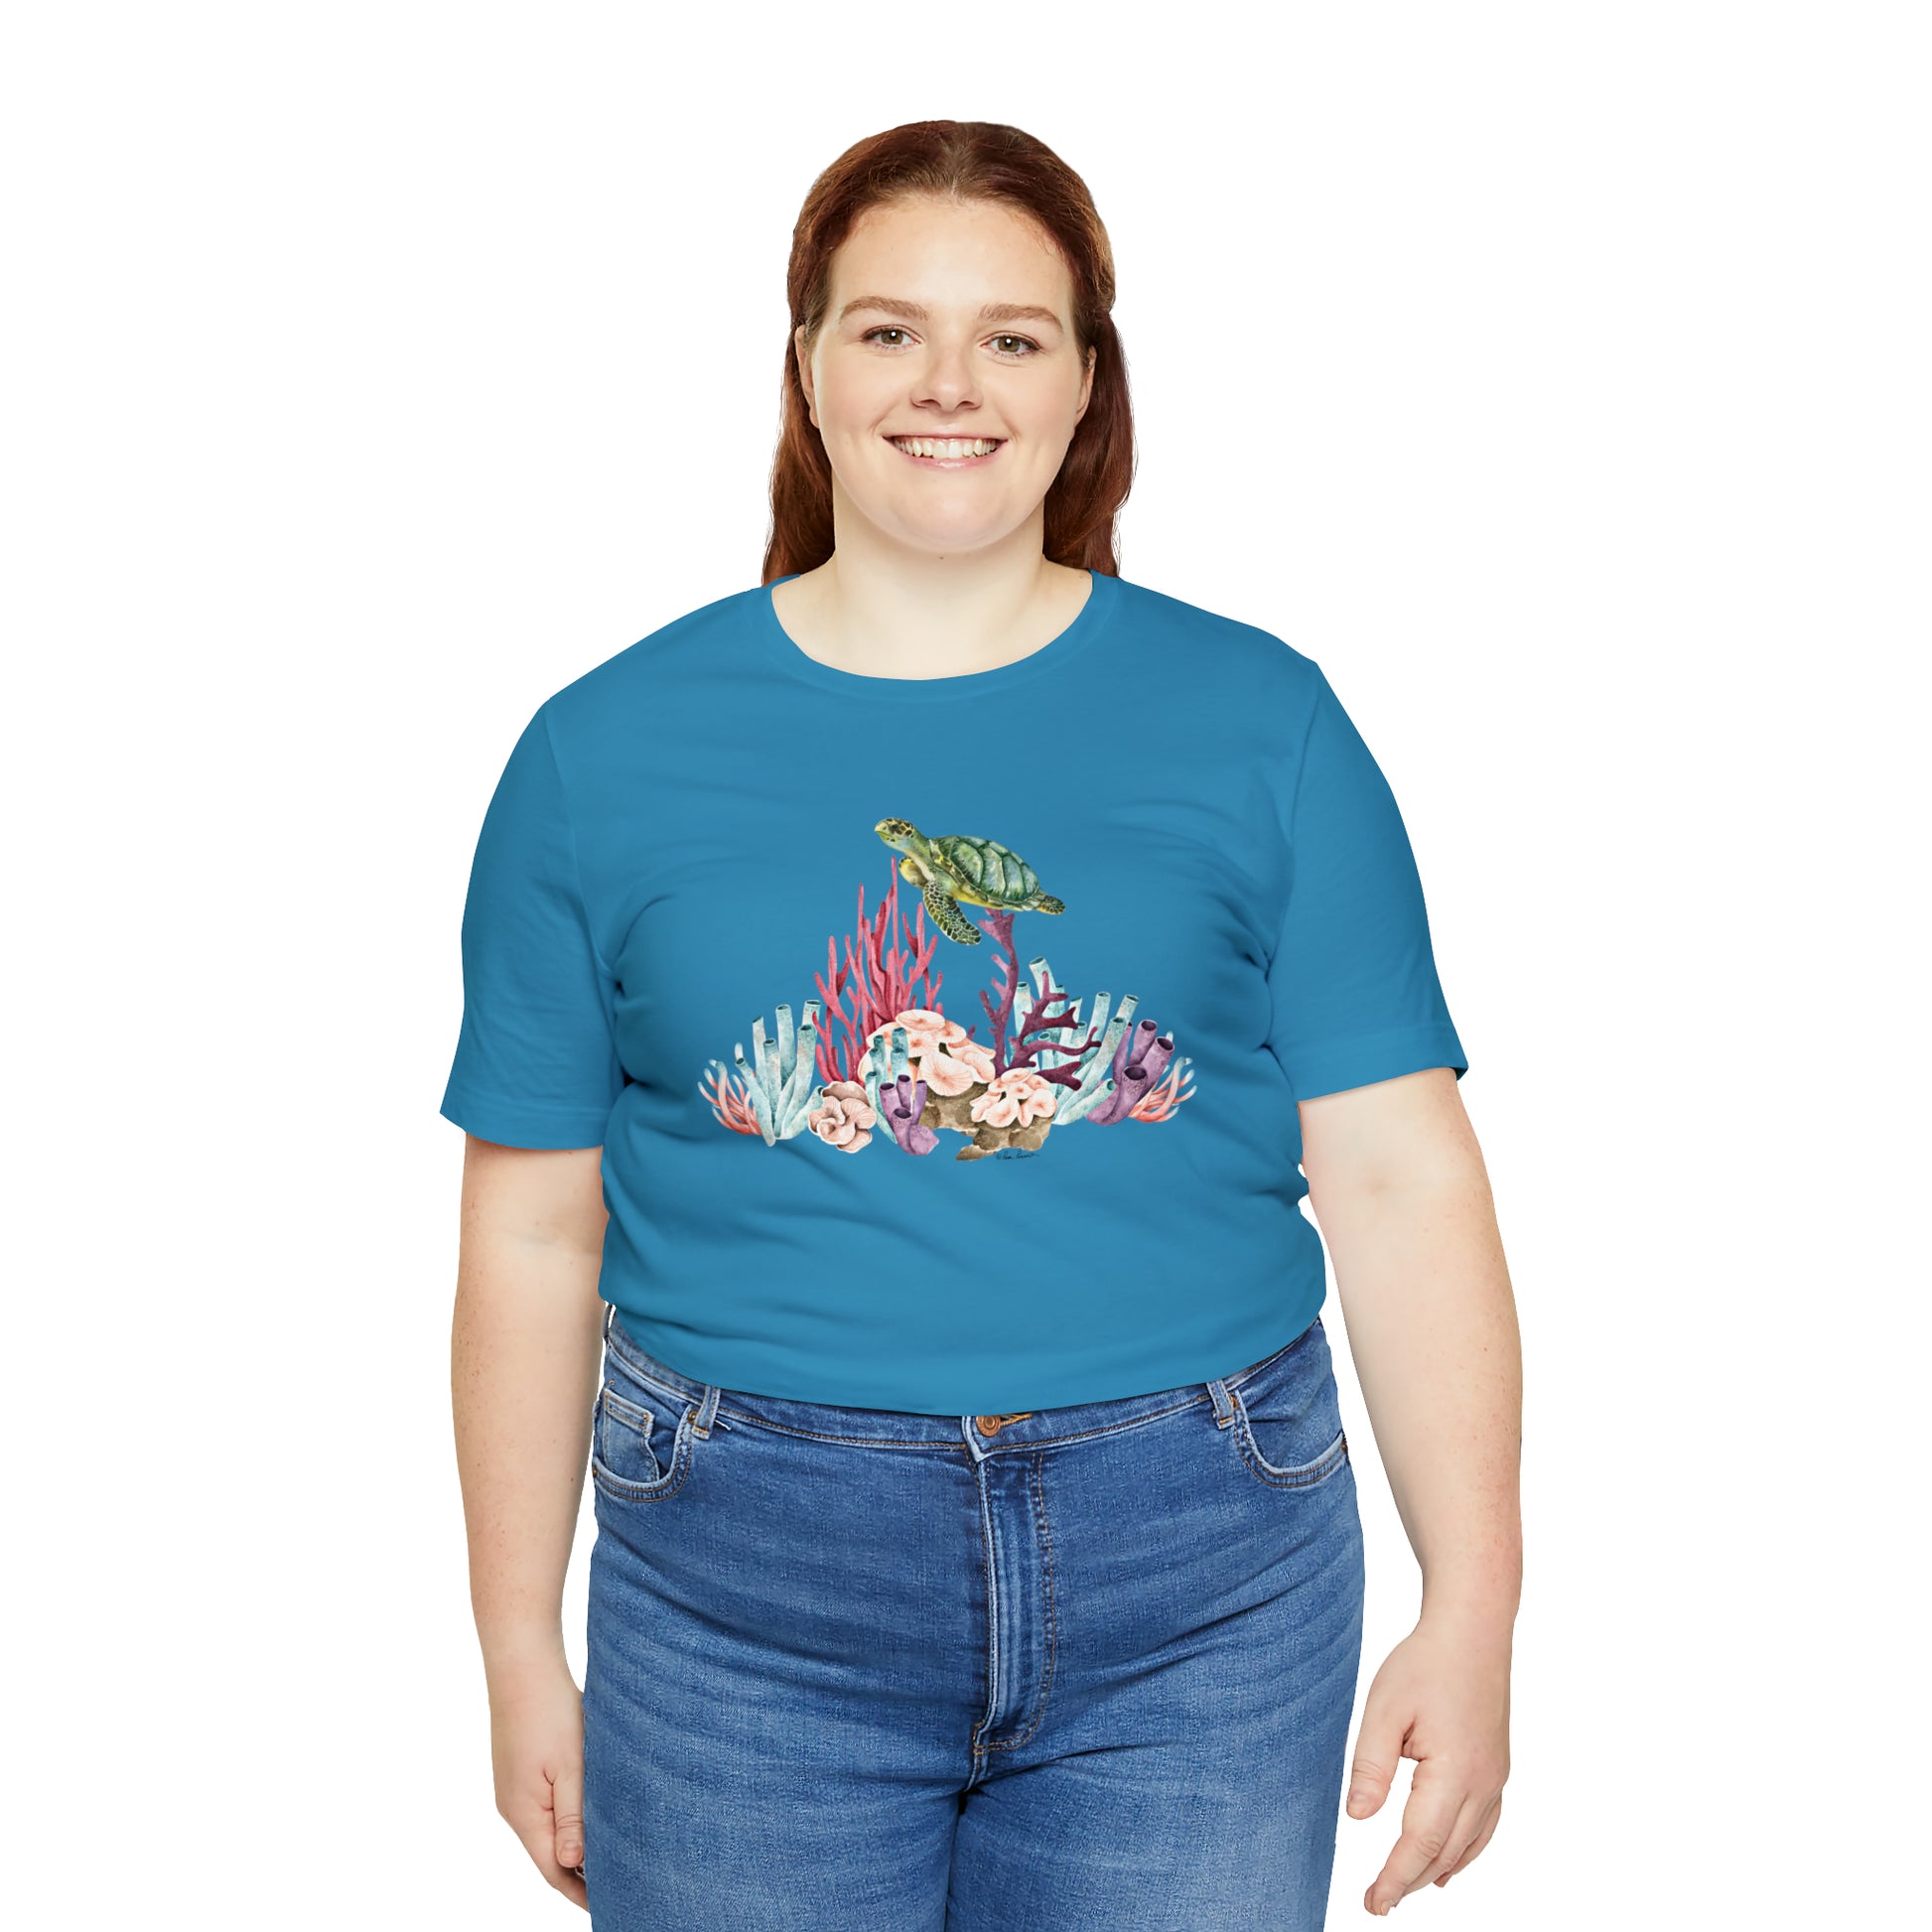 Mock up of a plus-size woman wearing the aqua shirt